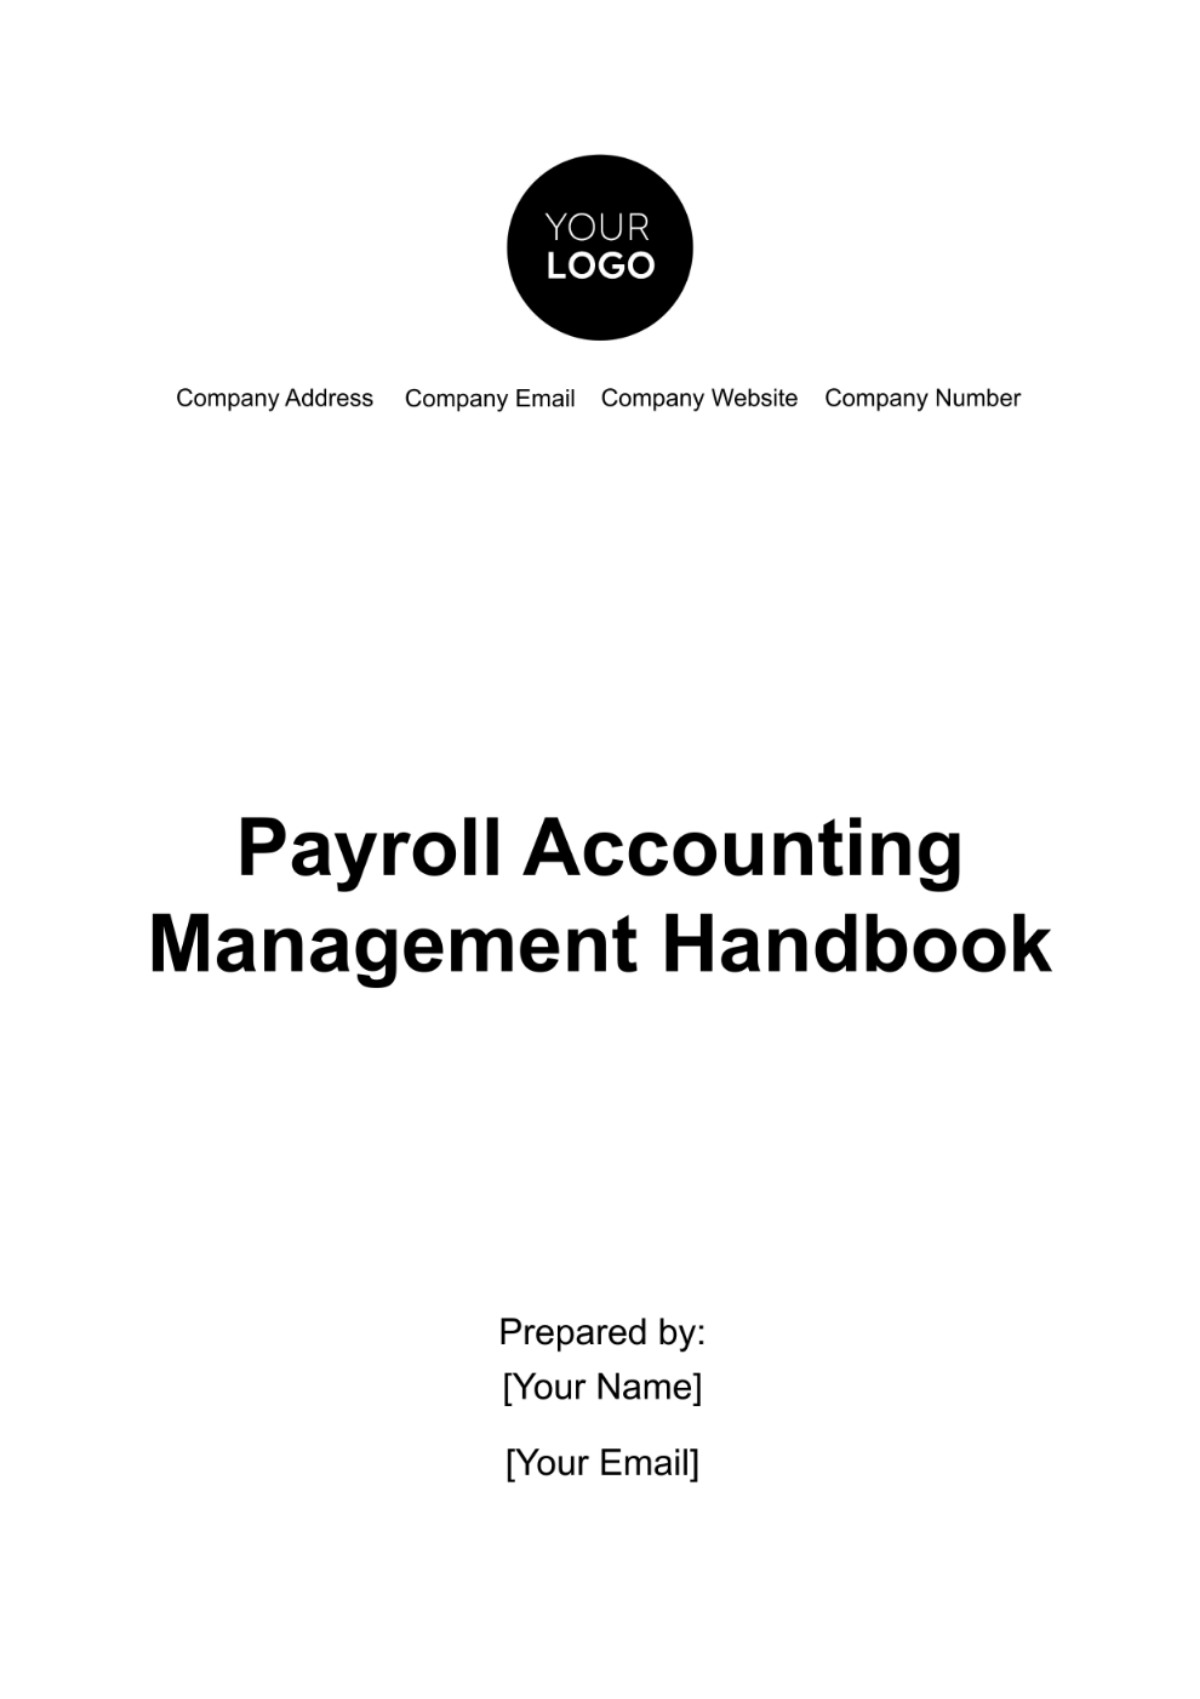 Payroll Accounting Management Handbook Template